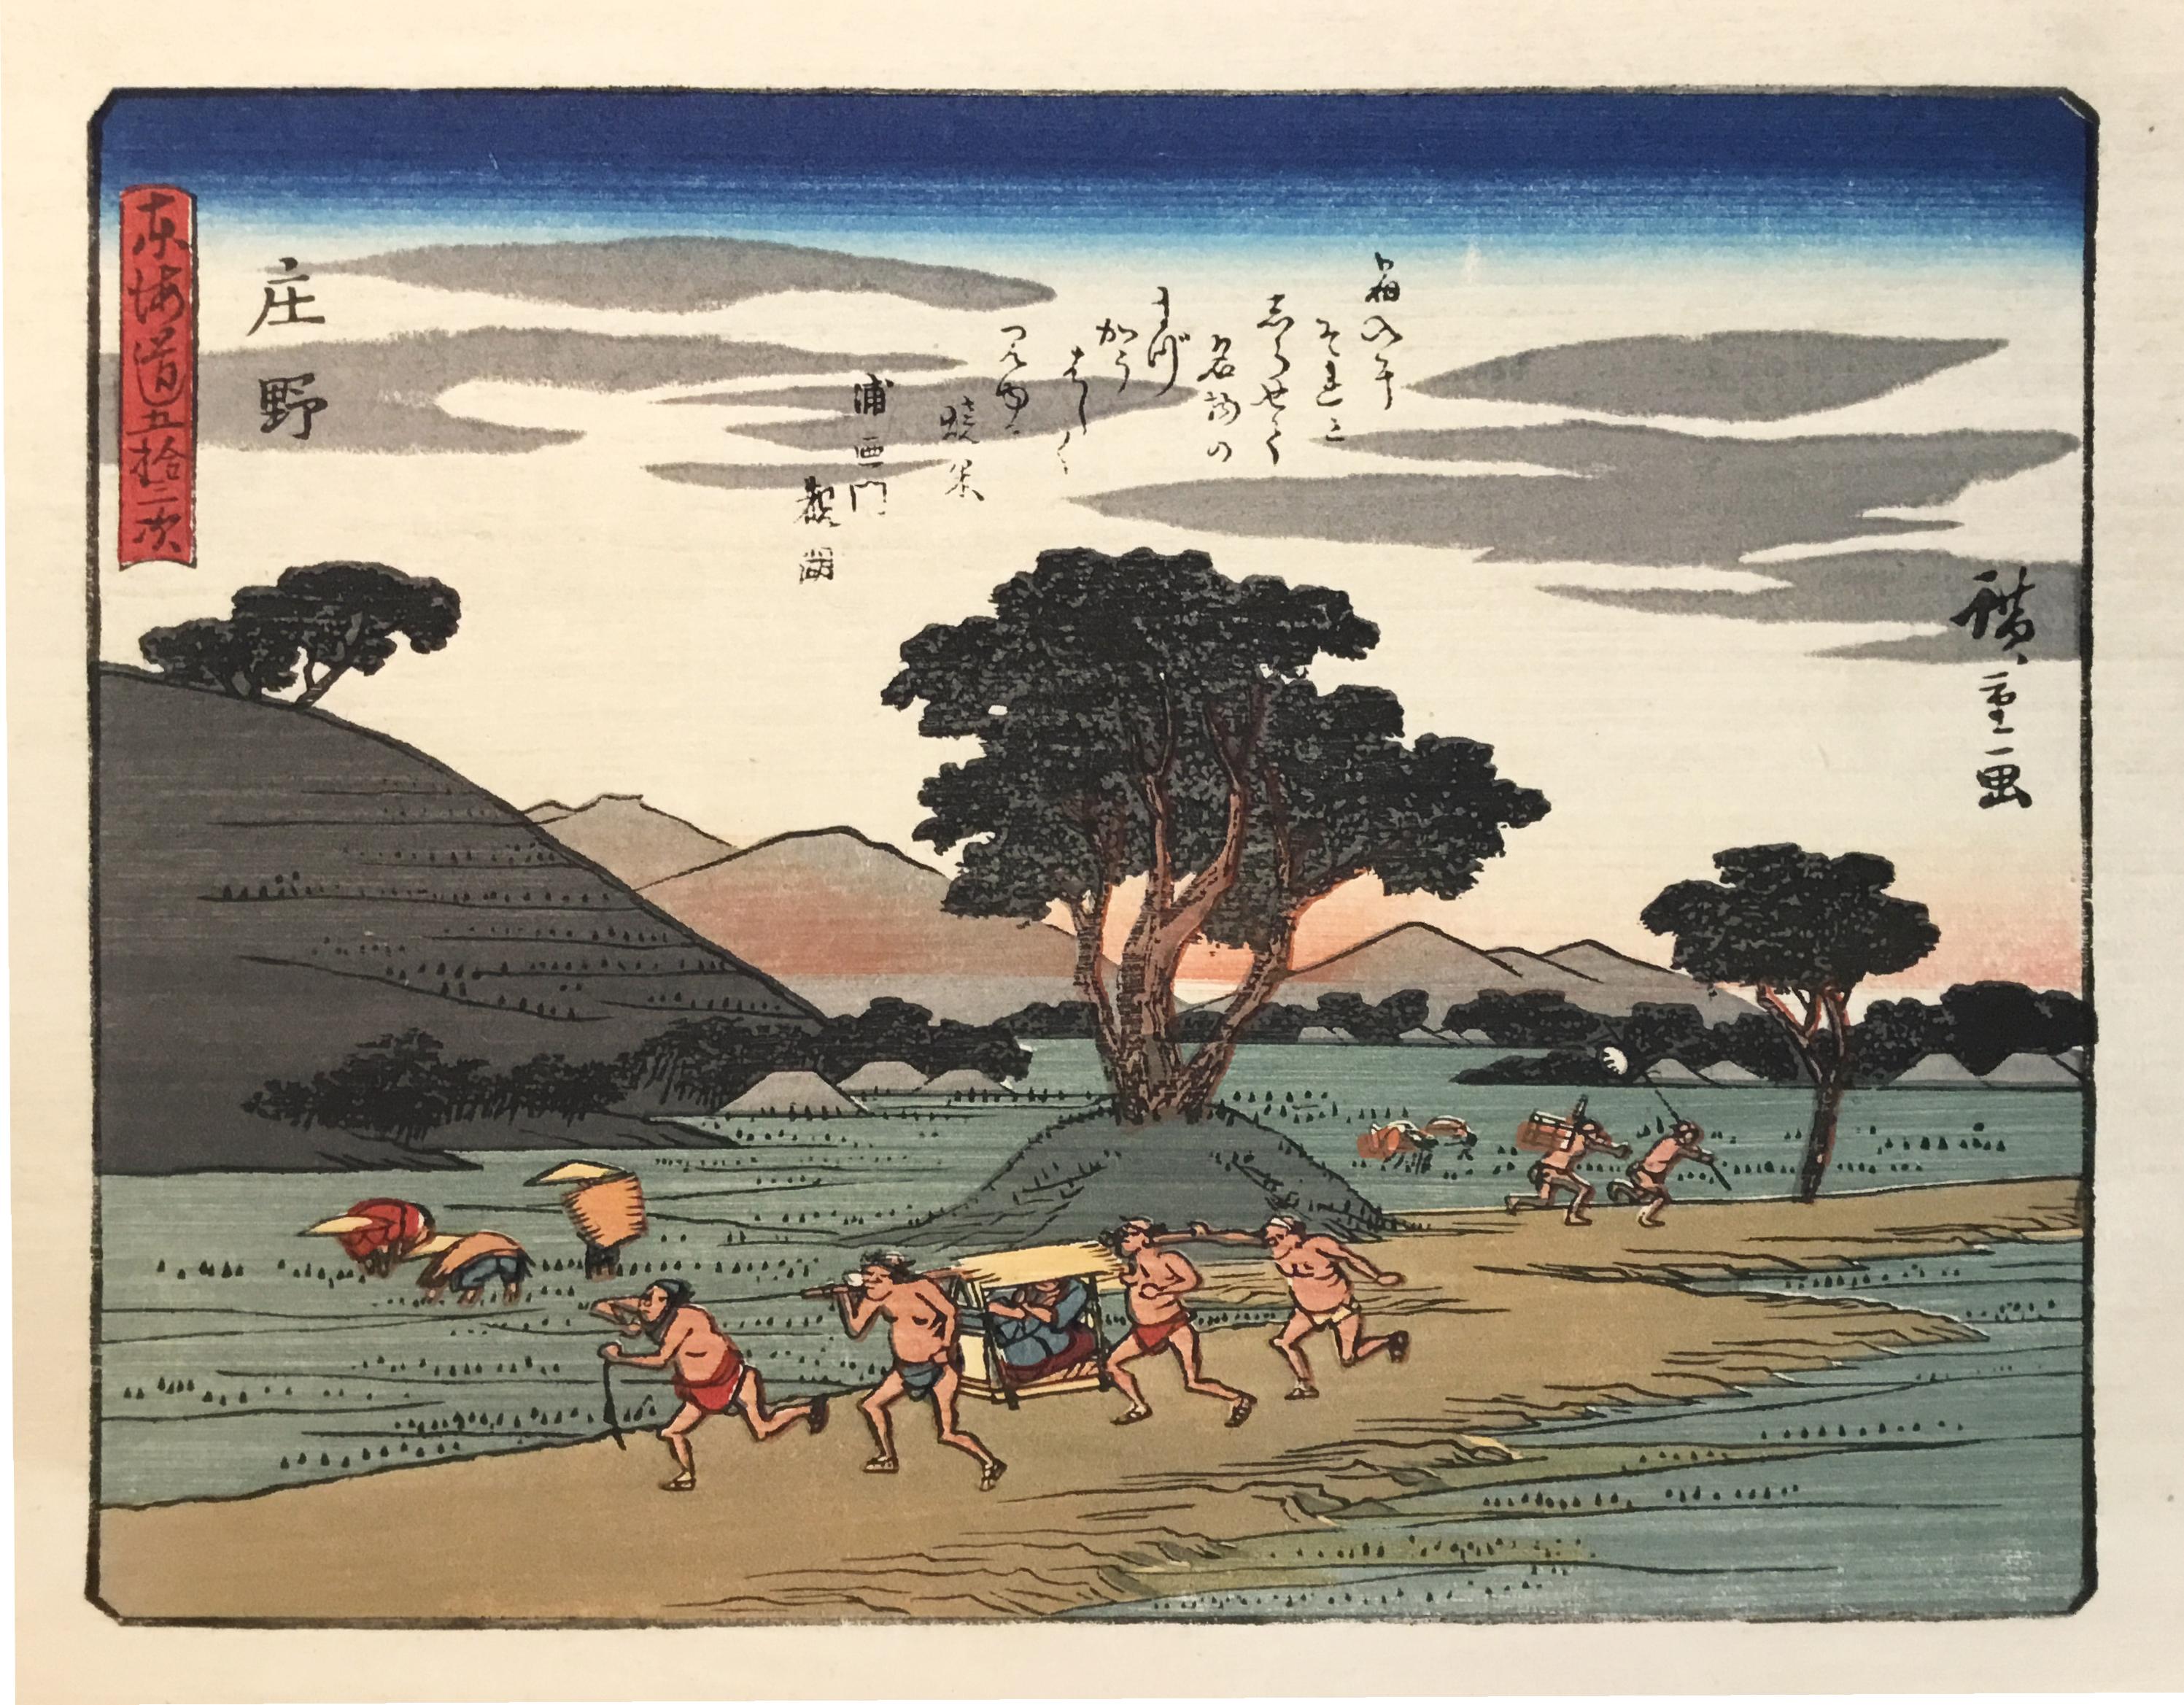 Utagawa Hiroshige (Ando Hiroshige) Landscape Print – „Ansicht von Shono“, nach Utagawa Hiroshige, Ukiyo-E Holzschnitt, Tokaido, Edo